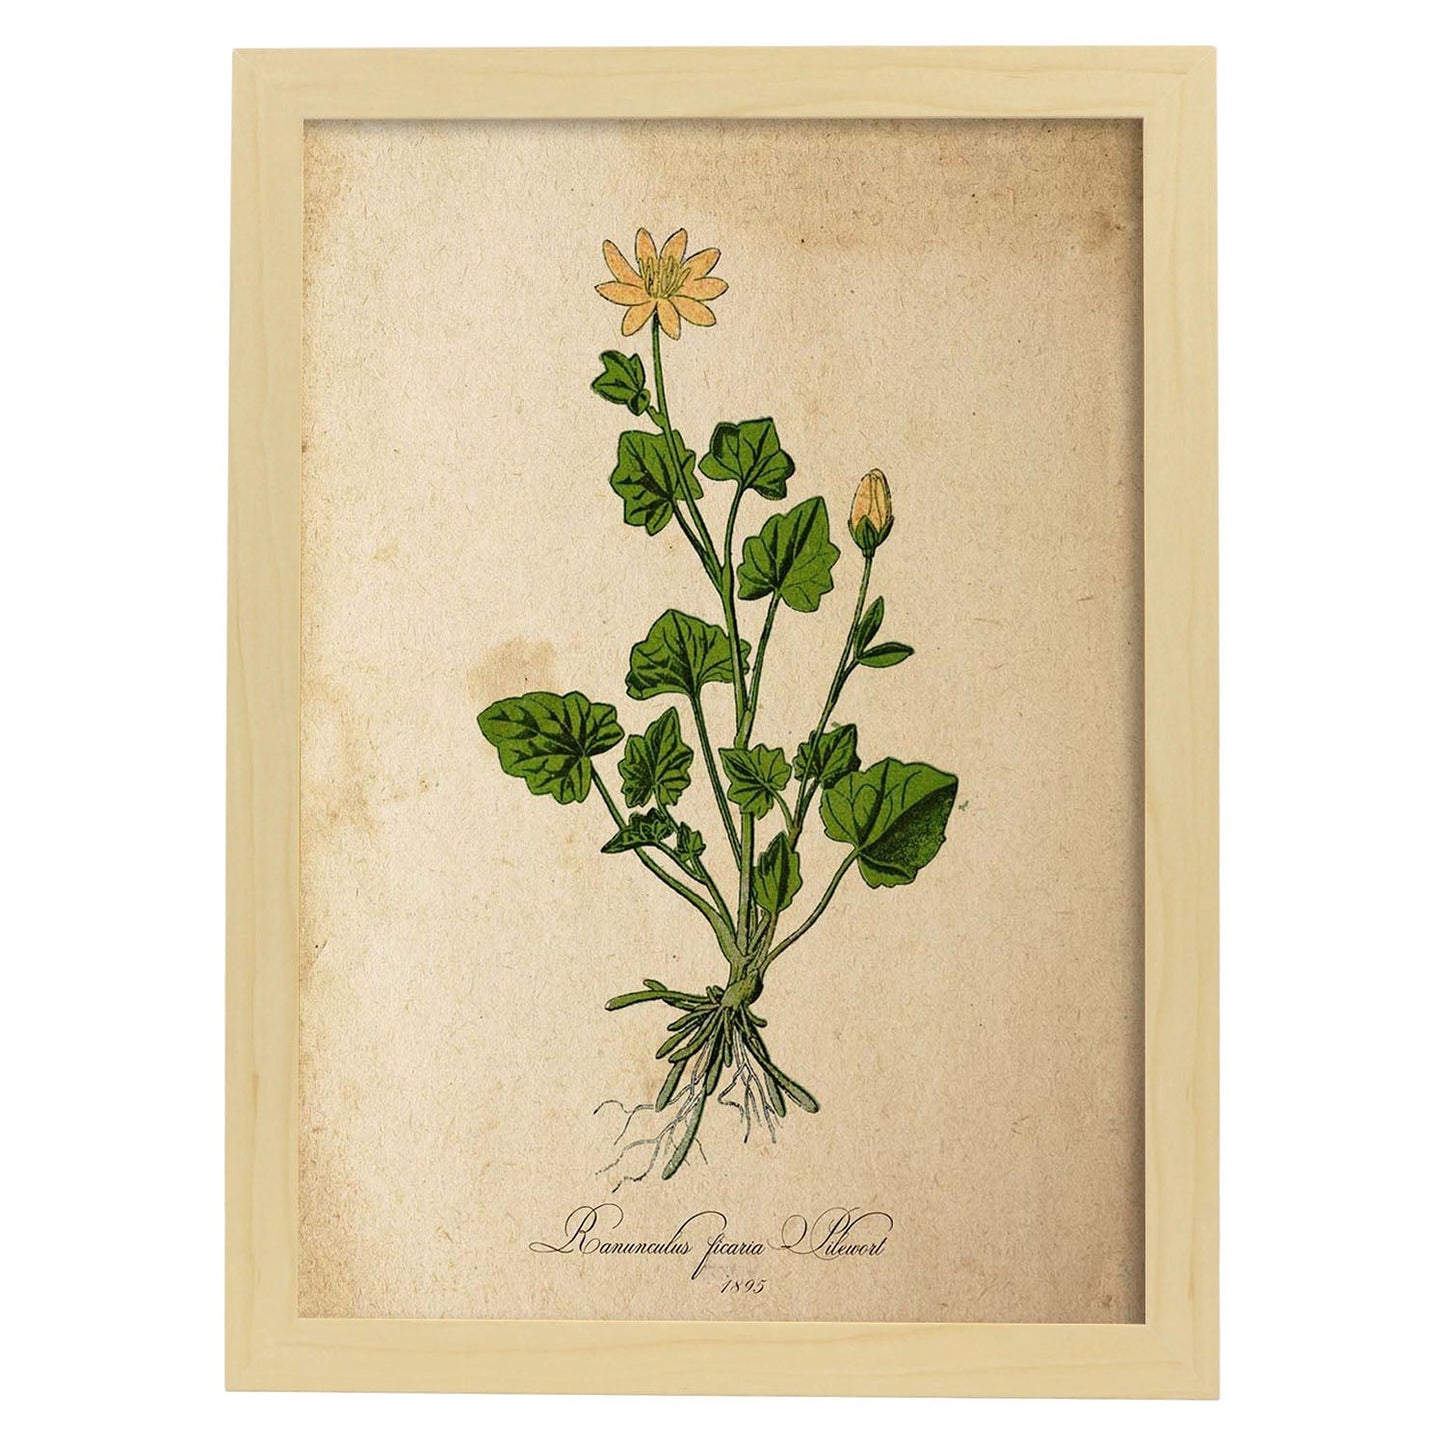 Poster de flores vintage. Lámina Ranunculus ficaria con diseño vintage.-Artwork-Nacnic-A4-Marco Madera clara-Nacnic Estudio SL